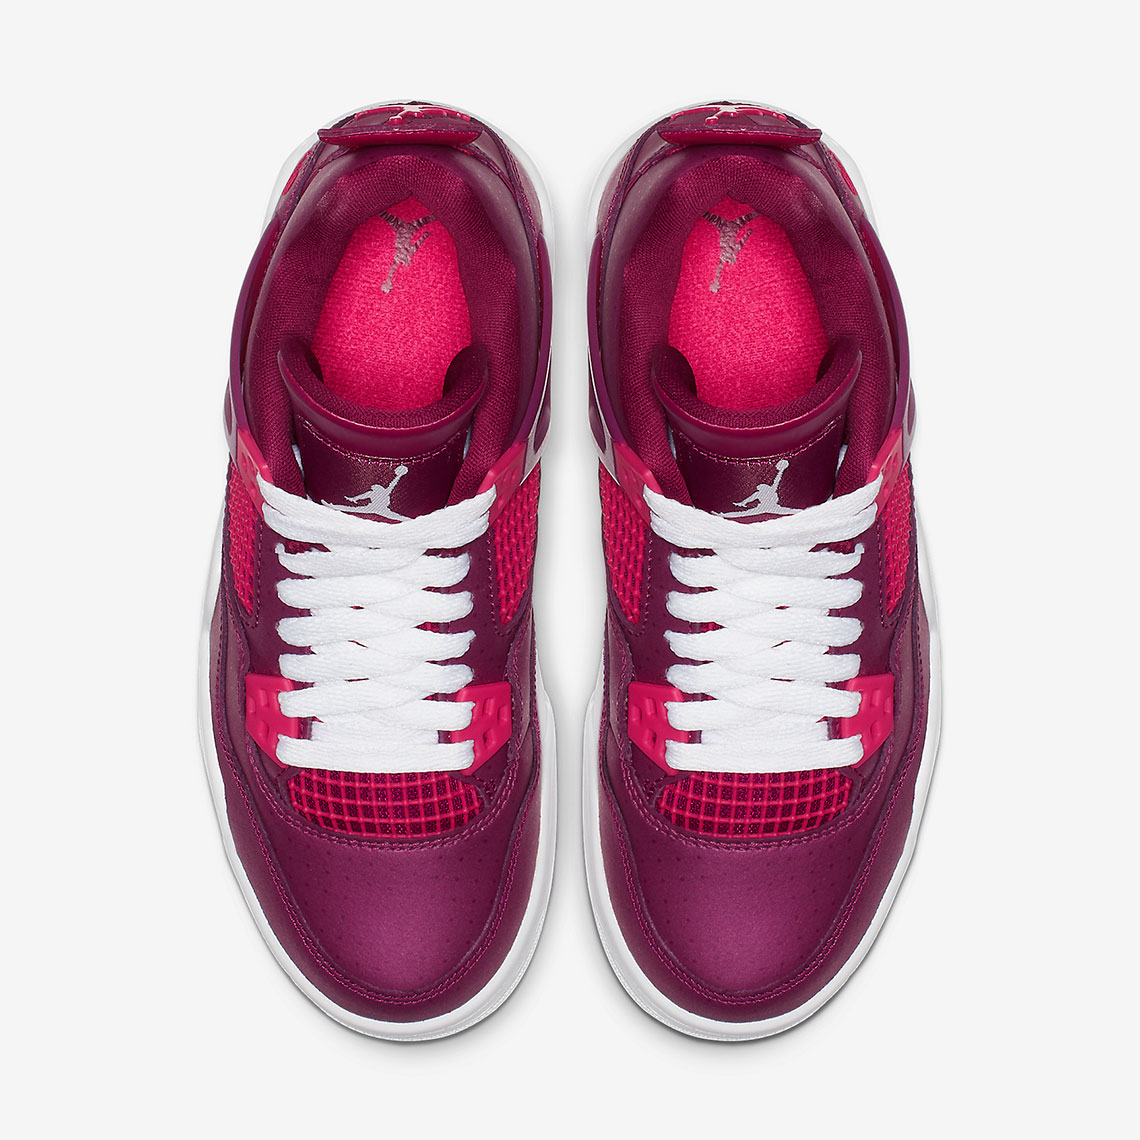 Jordan 4 Berry Pink 487724 661 Release / Store List1140 x 1140